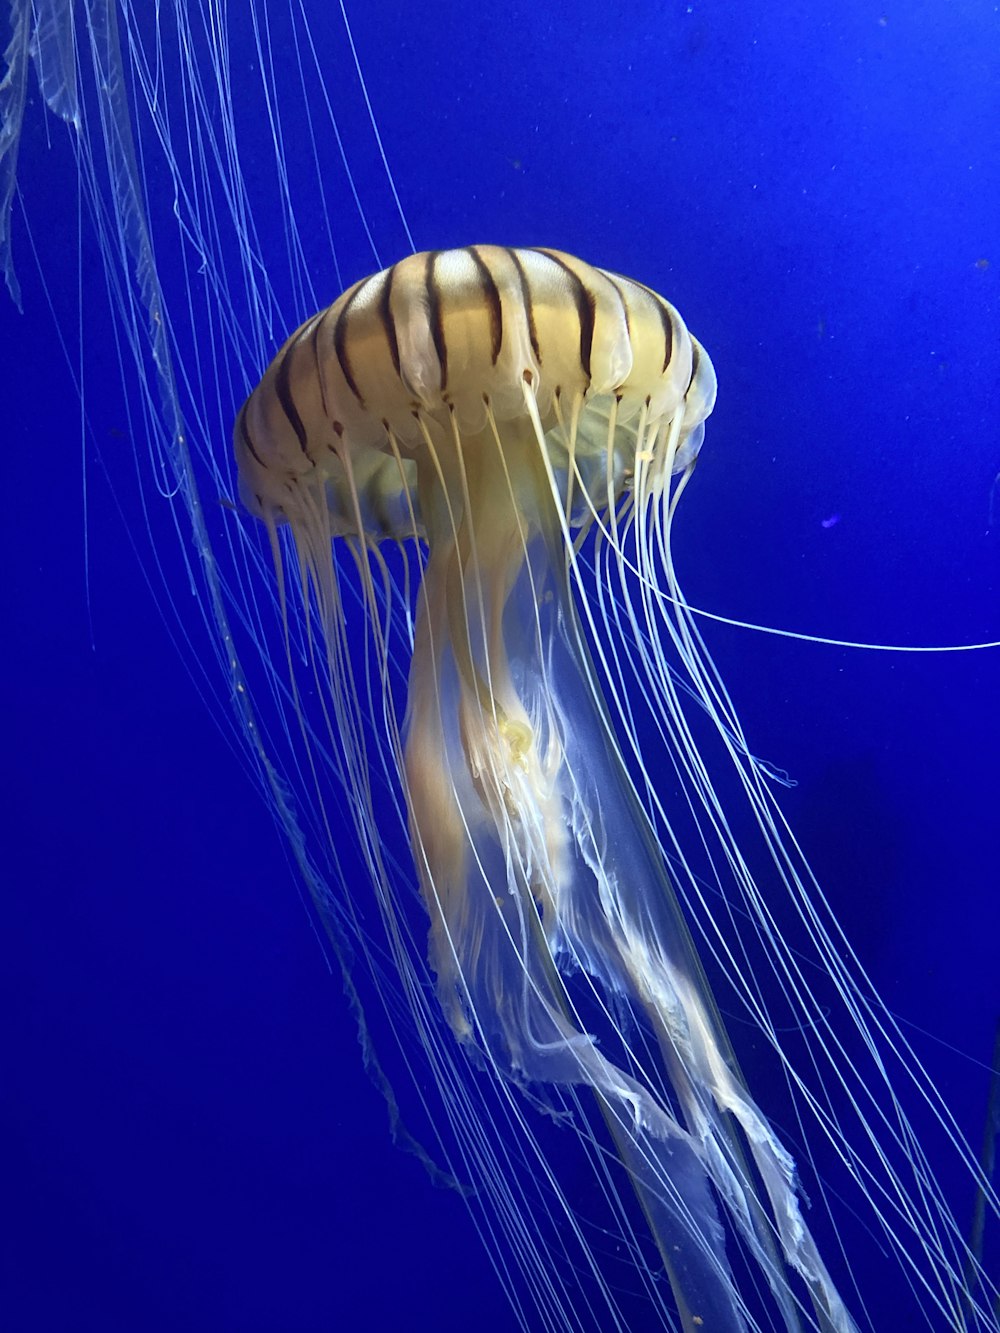 a large jellyfish swimming in a blue aquarium